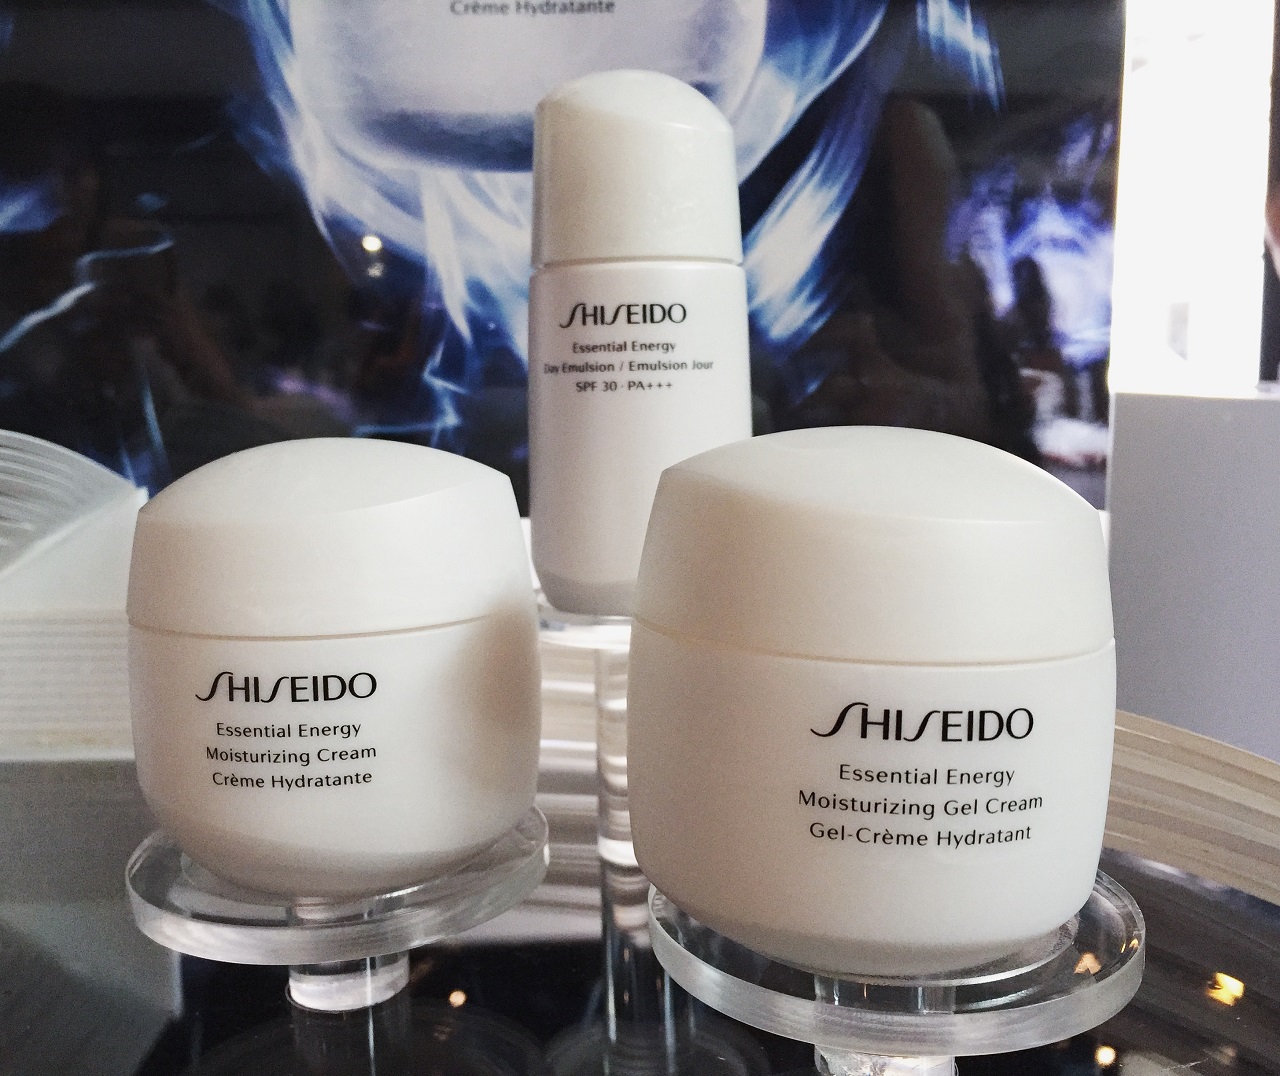 Shiseido essential energy. Крем Shiseido Essential Energy. Шисейдо Essential Energy Hydrating Cream. Набор шисейдо Essential Energy. Shiseido Essential Energy Moisturizing Cream.